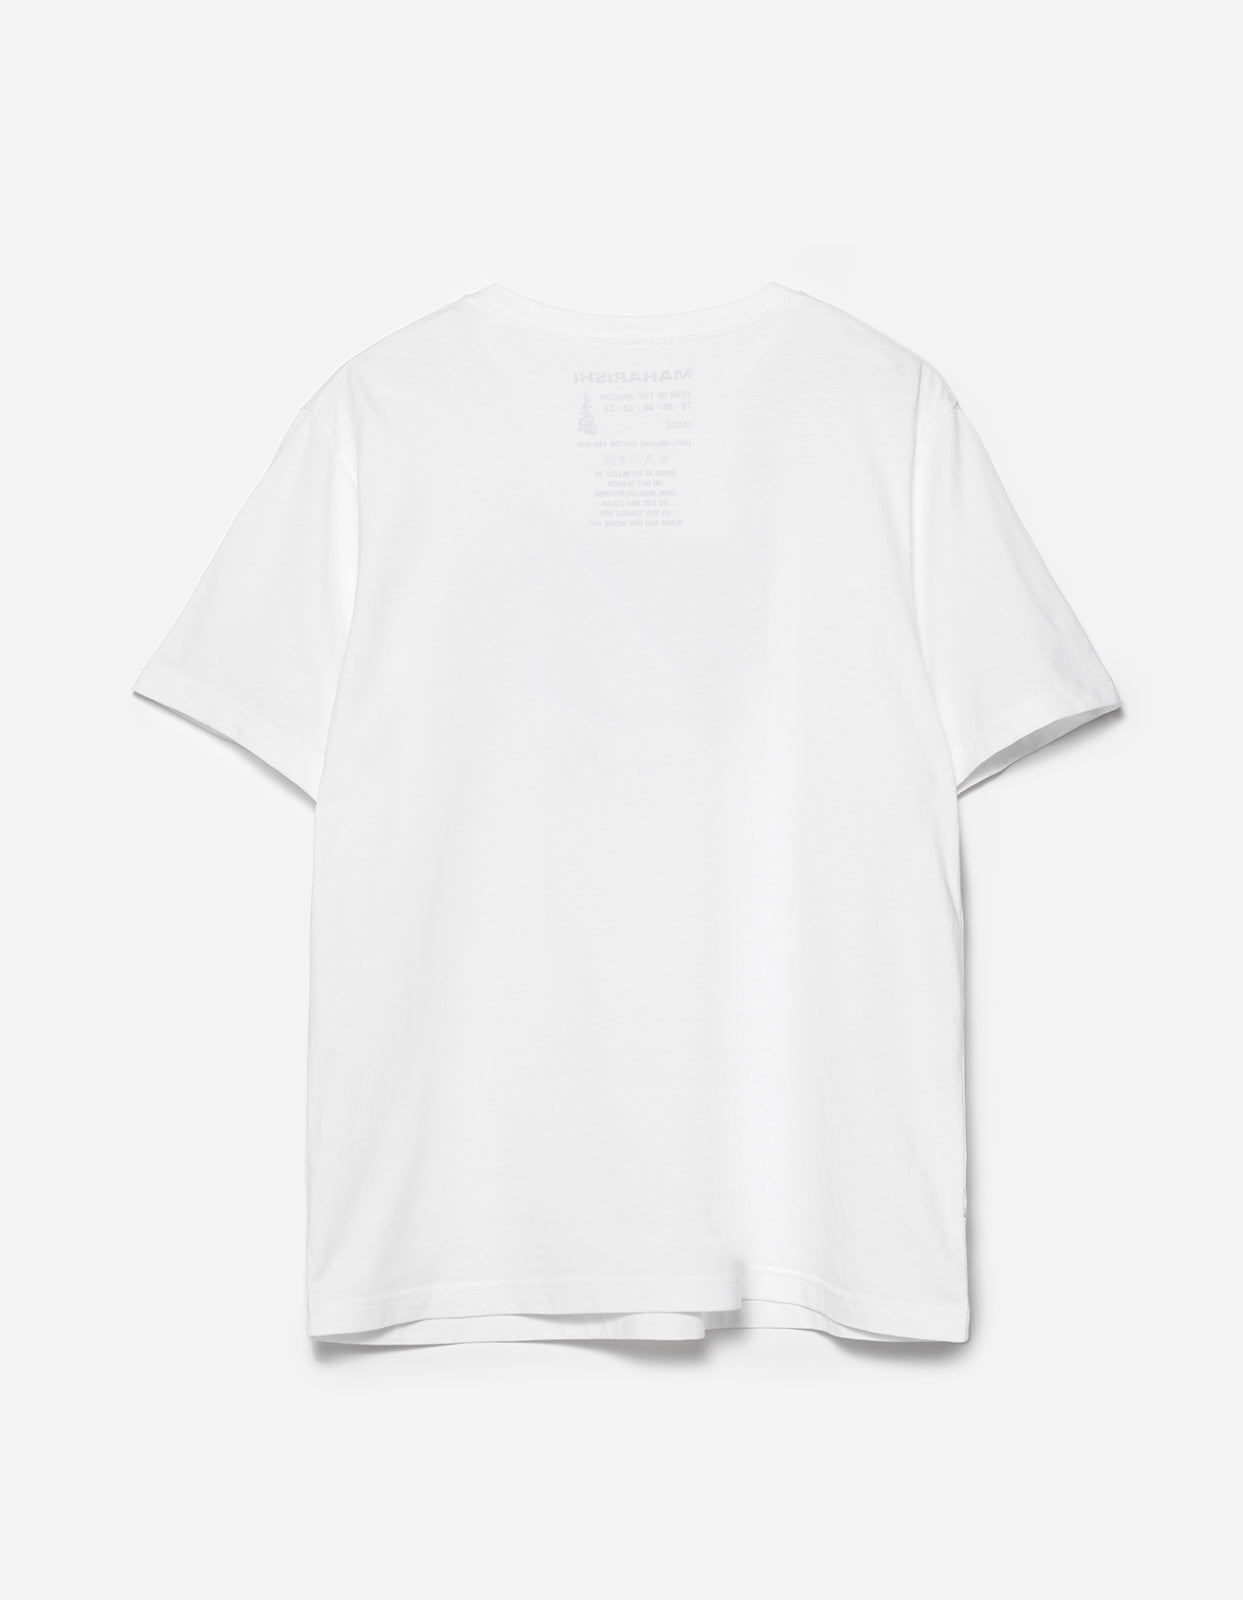 5242 Thar Dragon Embroidered T-Shirt White